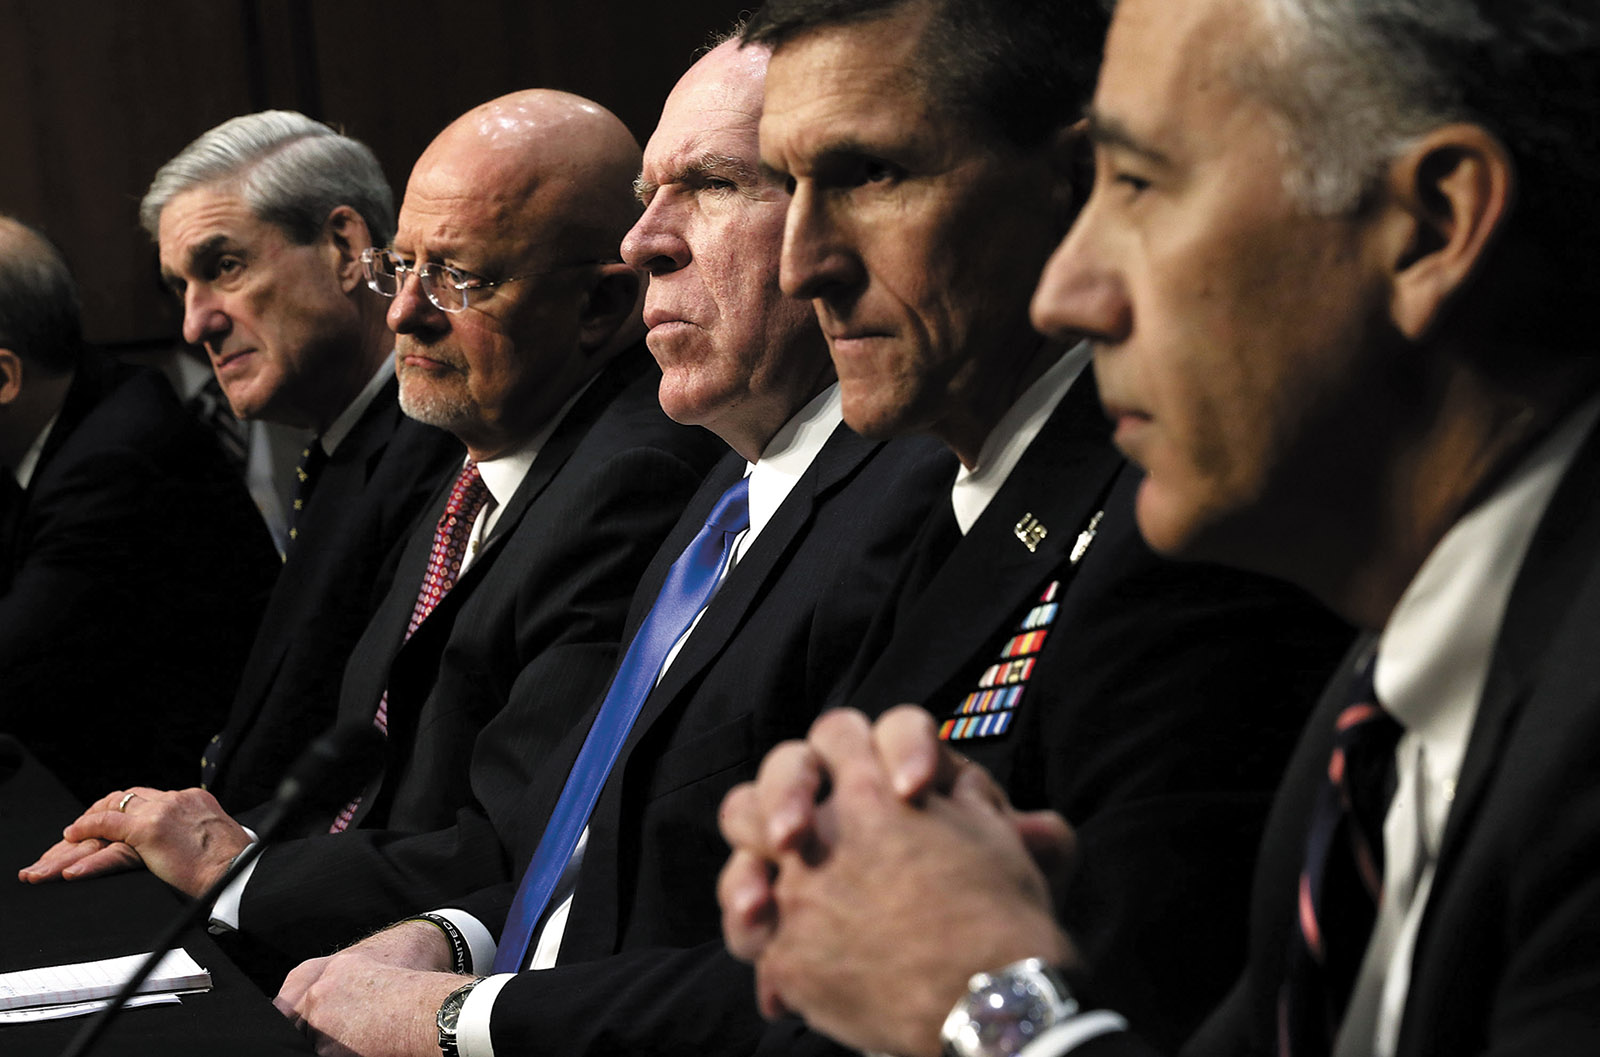 Robert Mueller, James Clapper, John Brennan, Michael Flynn, and Philip Goldberg at a Senate Intelligence Committee hearing, Washington, D.C., March 2013